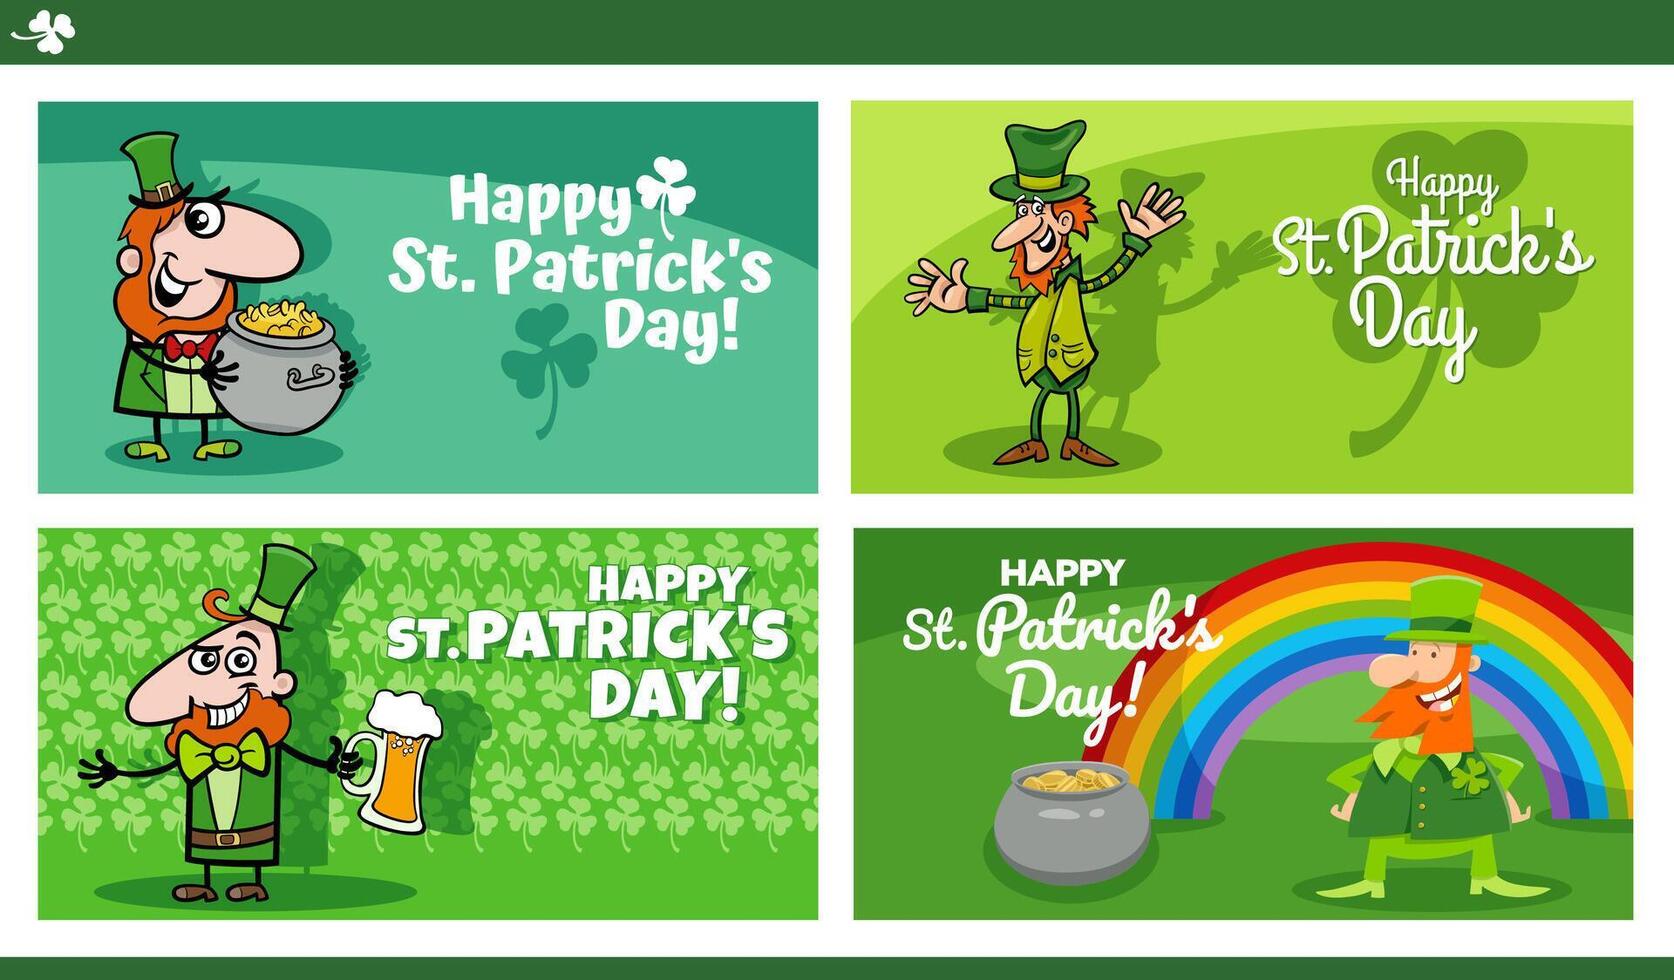 heilige Patrick dag ontwerpen reeks met tekenfilm elf van Ierse folklore karakter vector